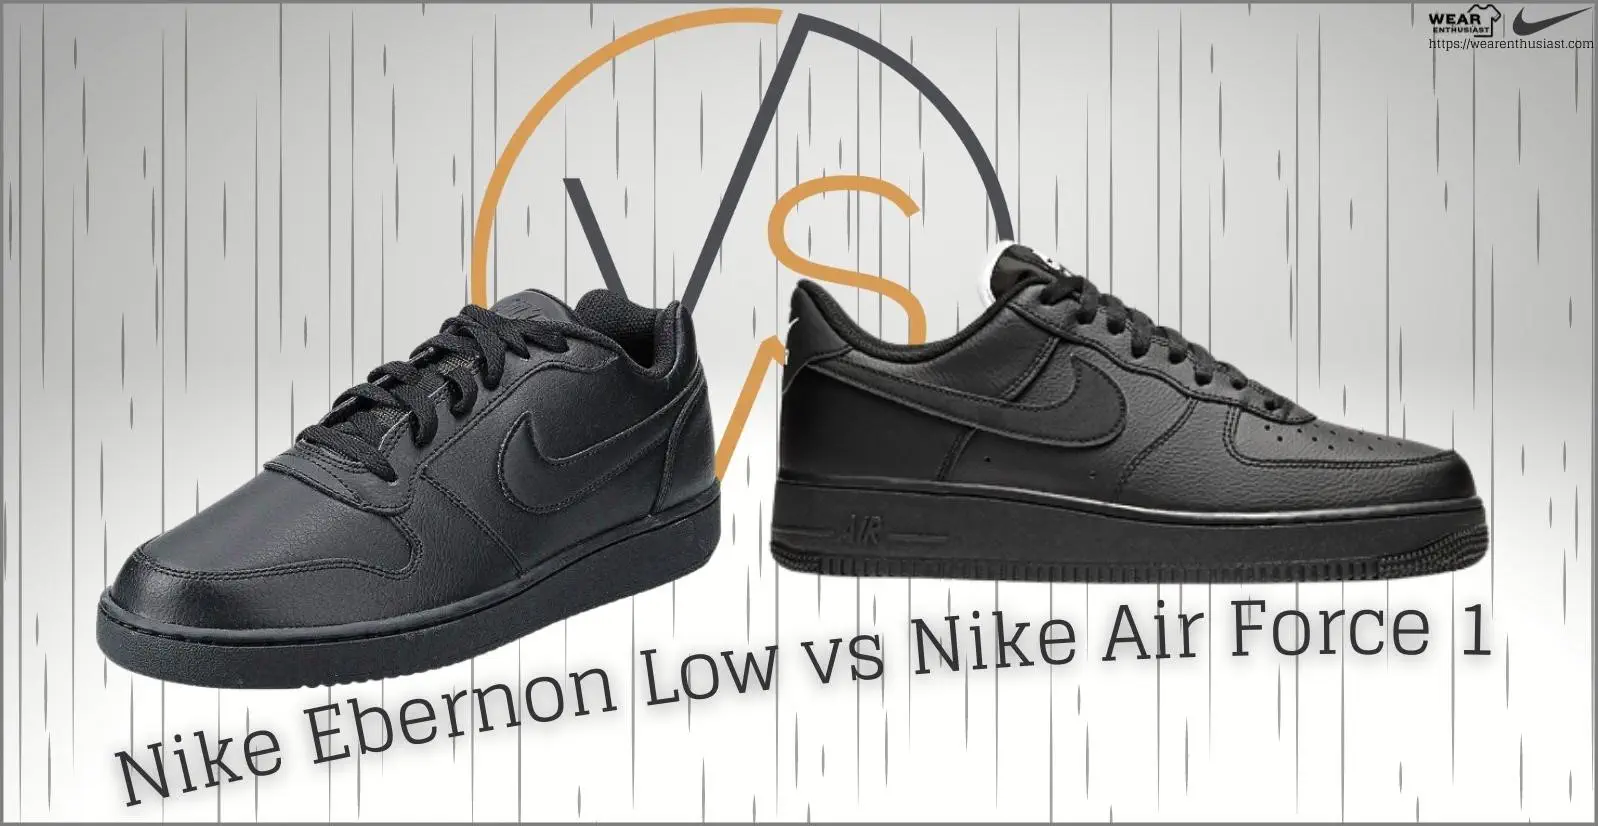 Nike Ebernon Low vs Air Force 1